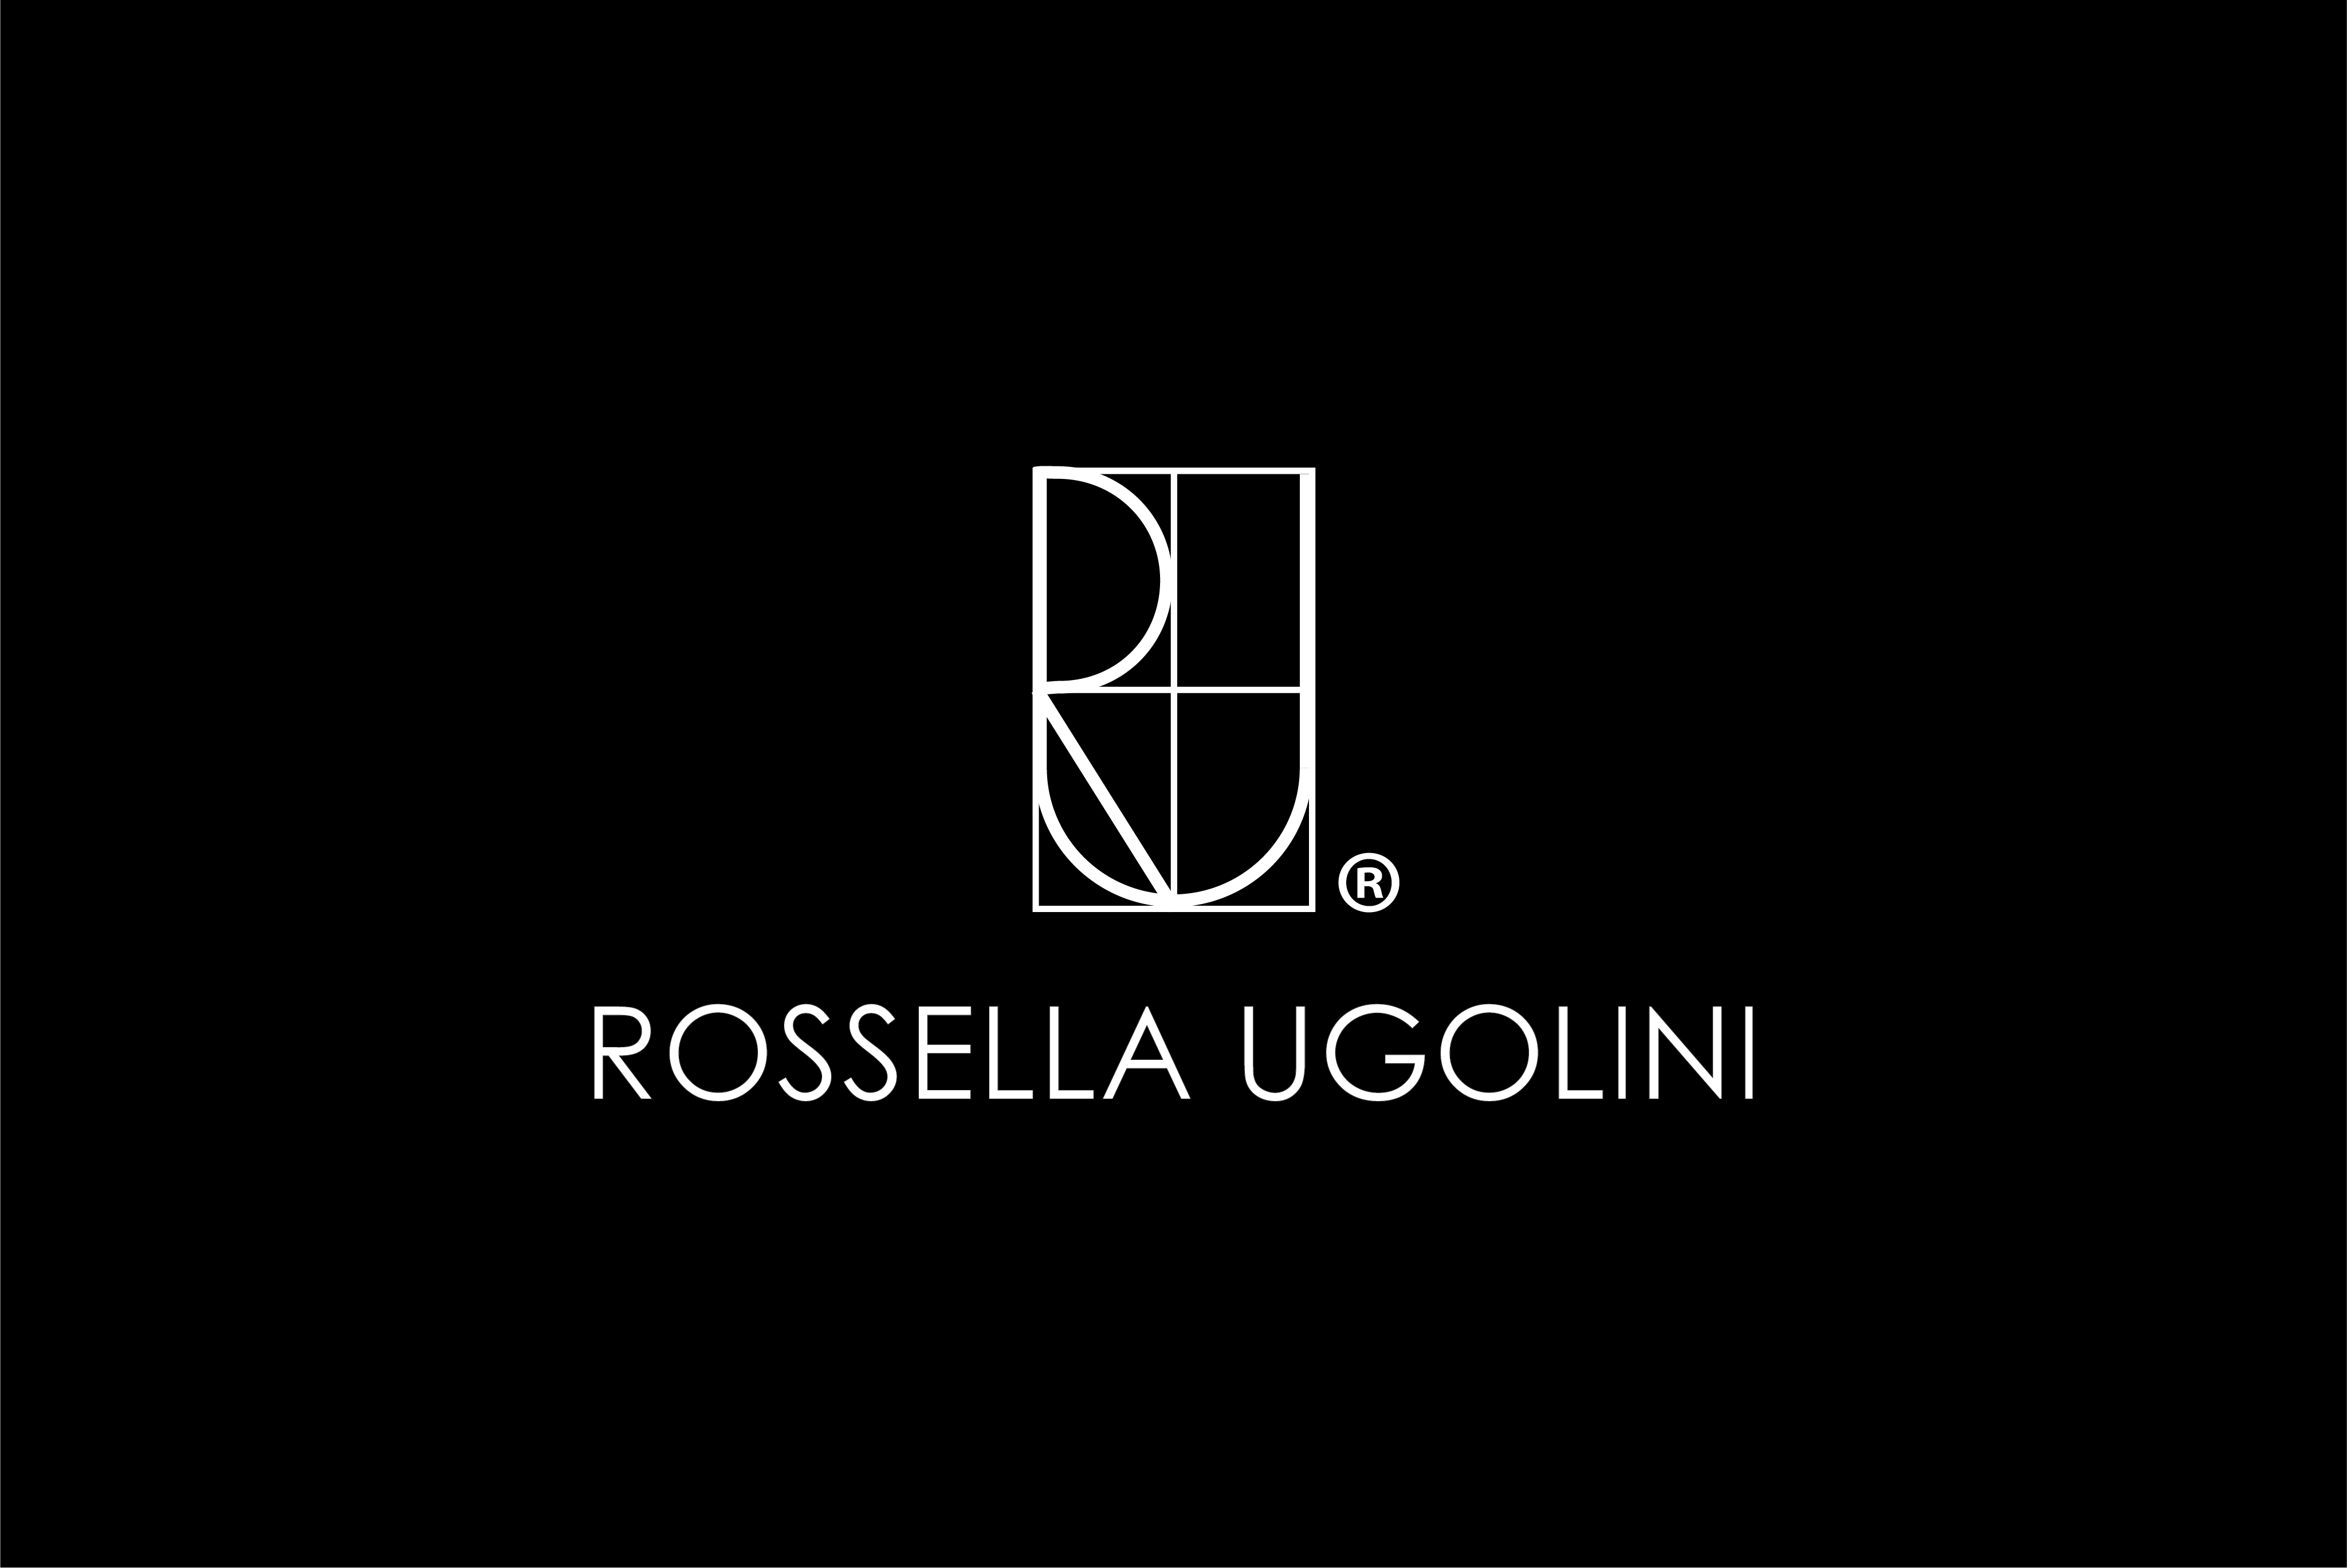 PR Rossella Ugolini